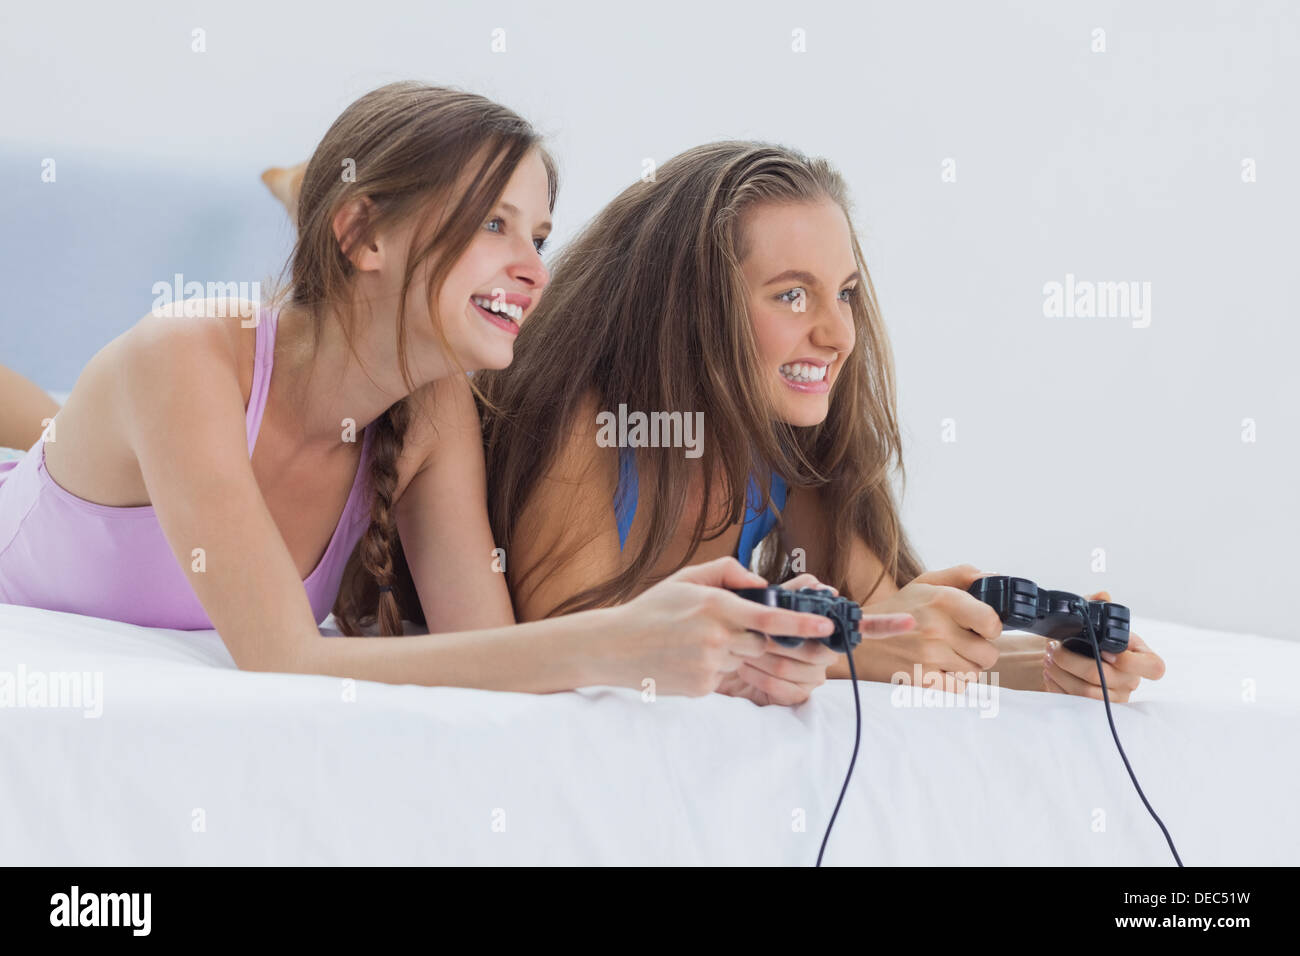 8.414 fotos de stock e banco de imagens de Girls Playing Video Games -  Getty Images